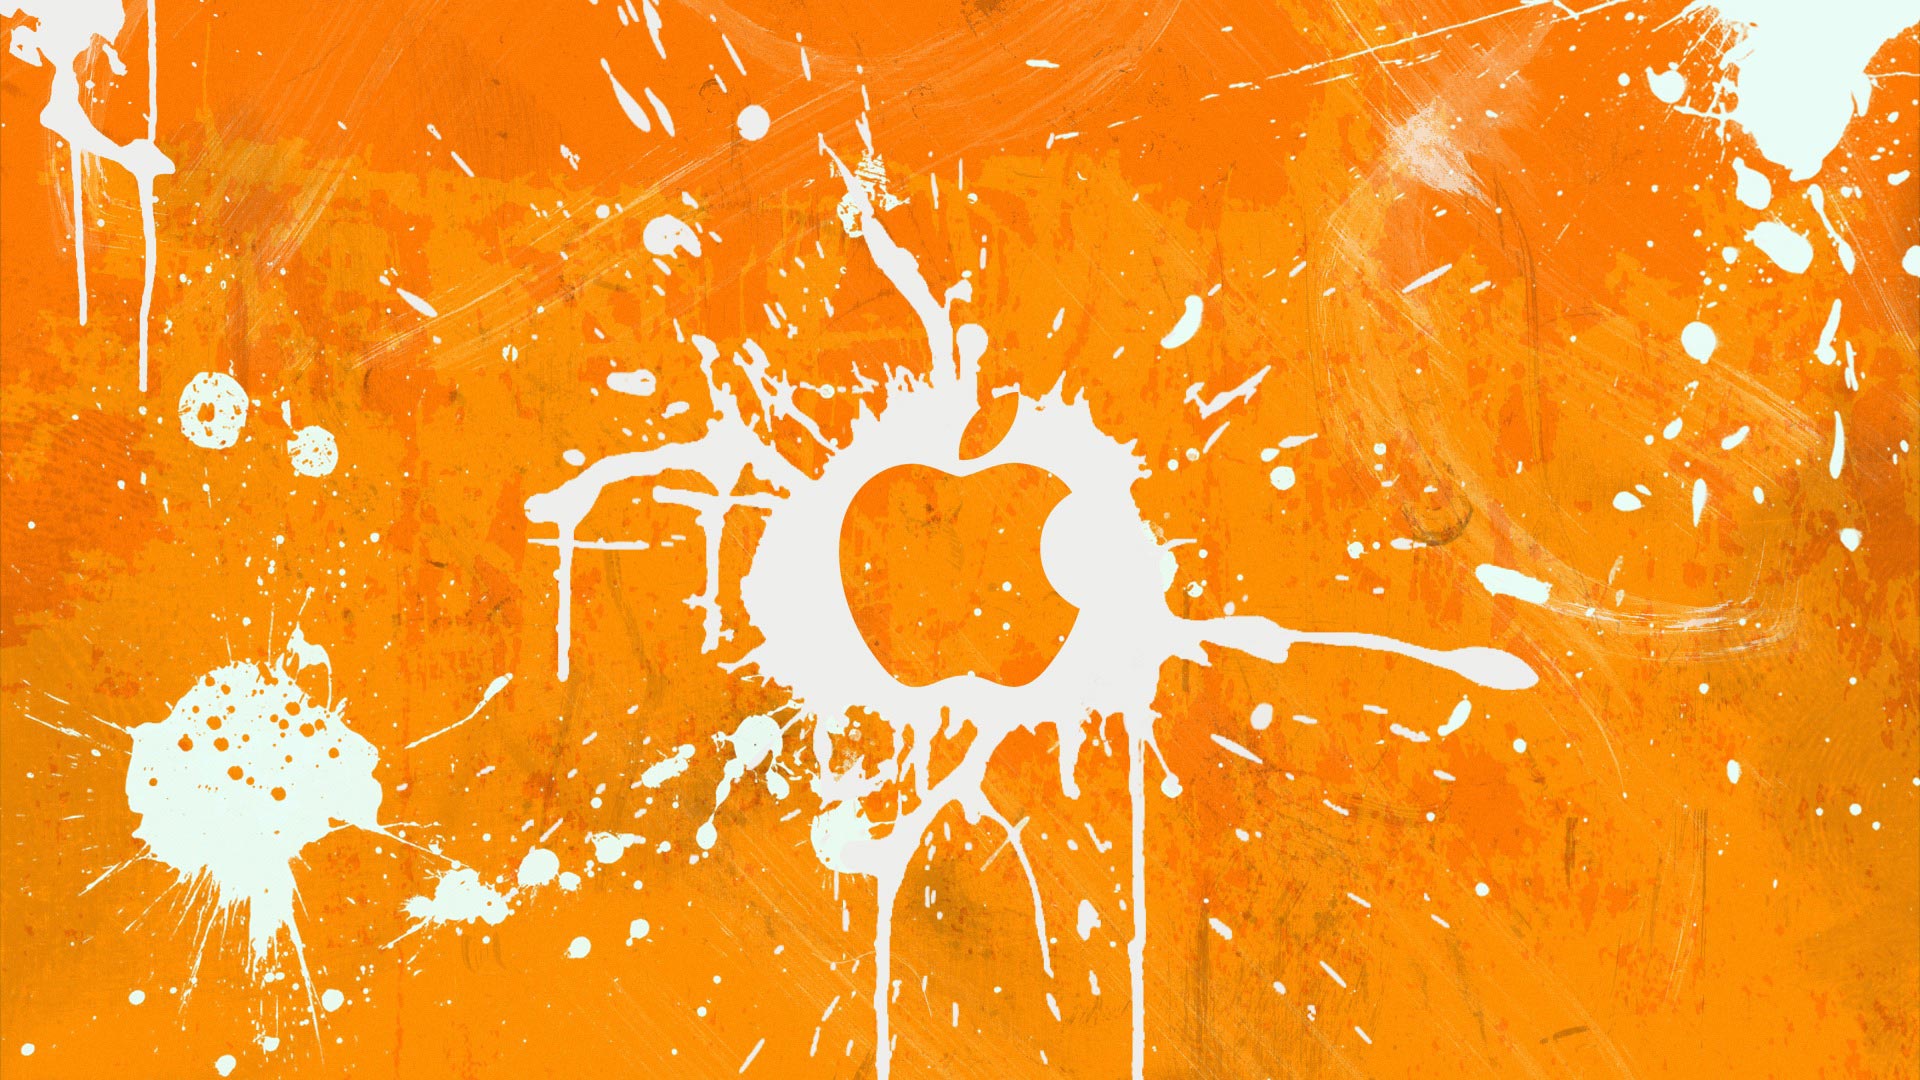 Abstract Orange Apple Wallpaper 998 1920x1080 - uMad.com